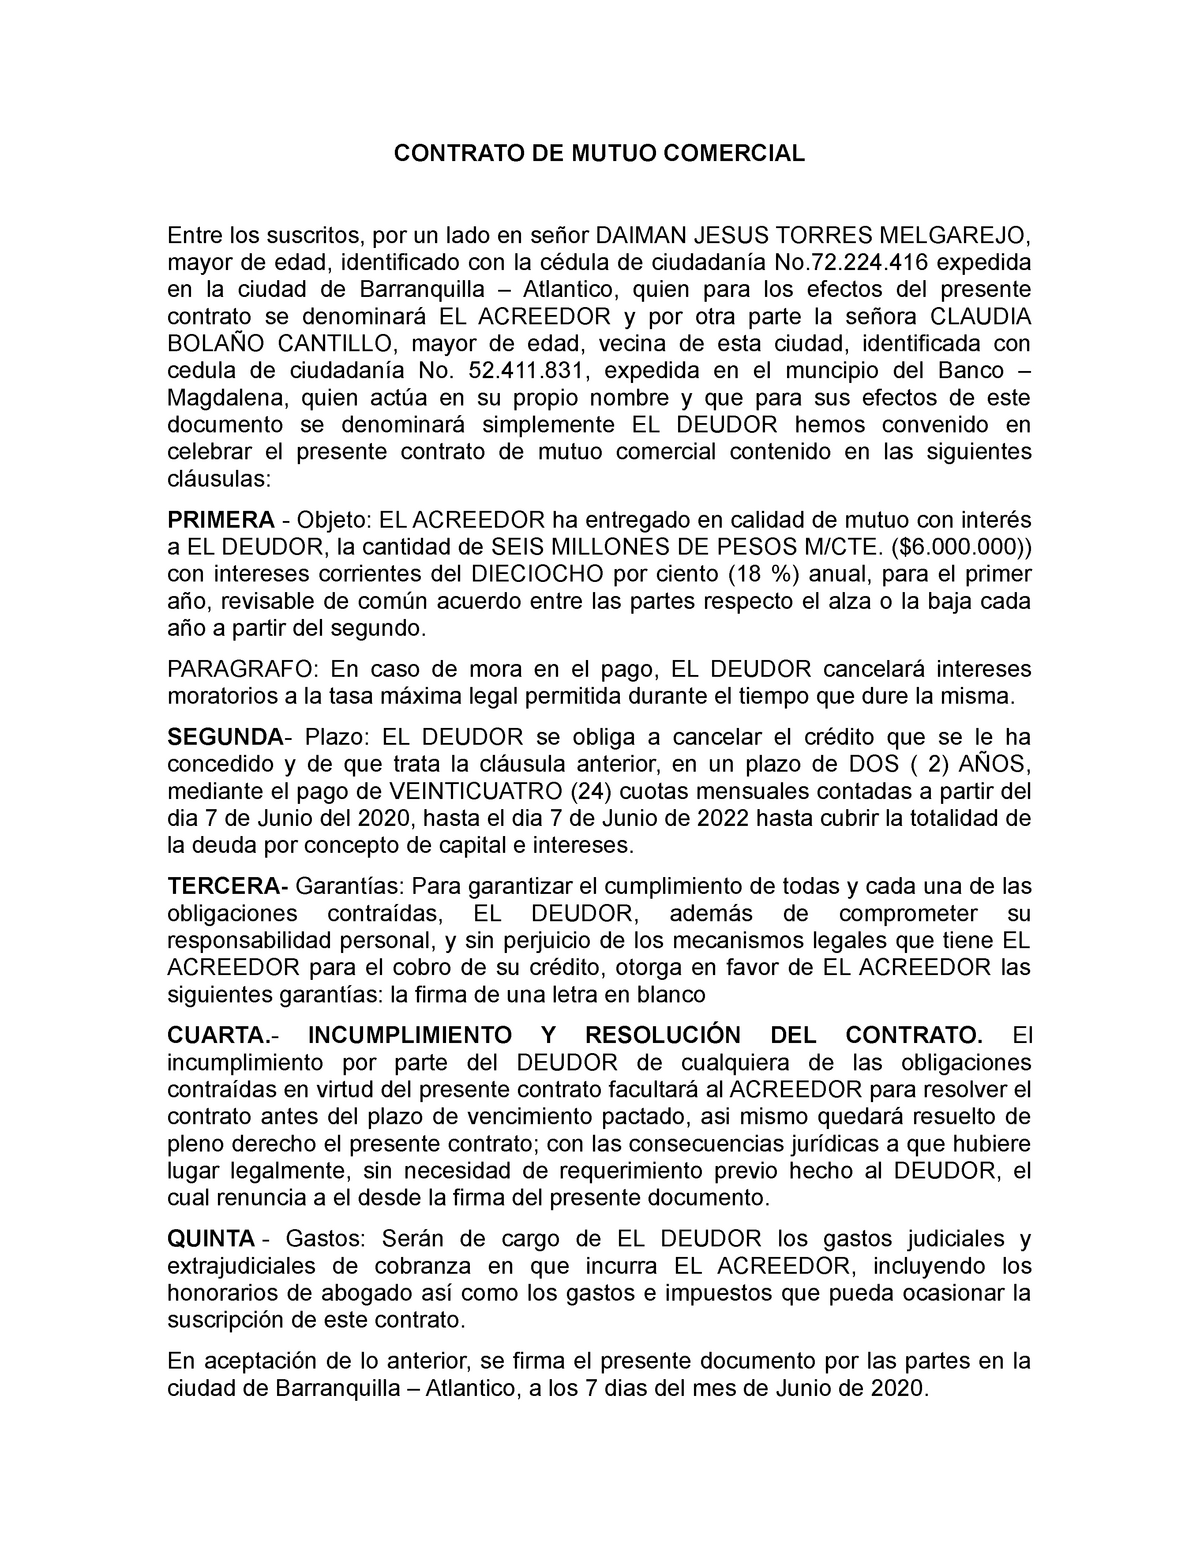 minuta de contrato de mutuo comercial - CONTRATO DE MUTUO COMERCIAL -  Studocu